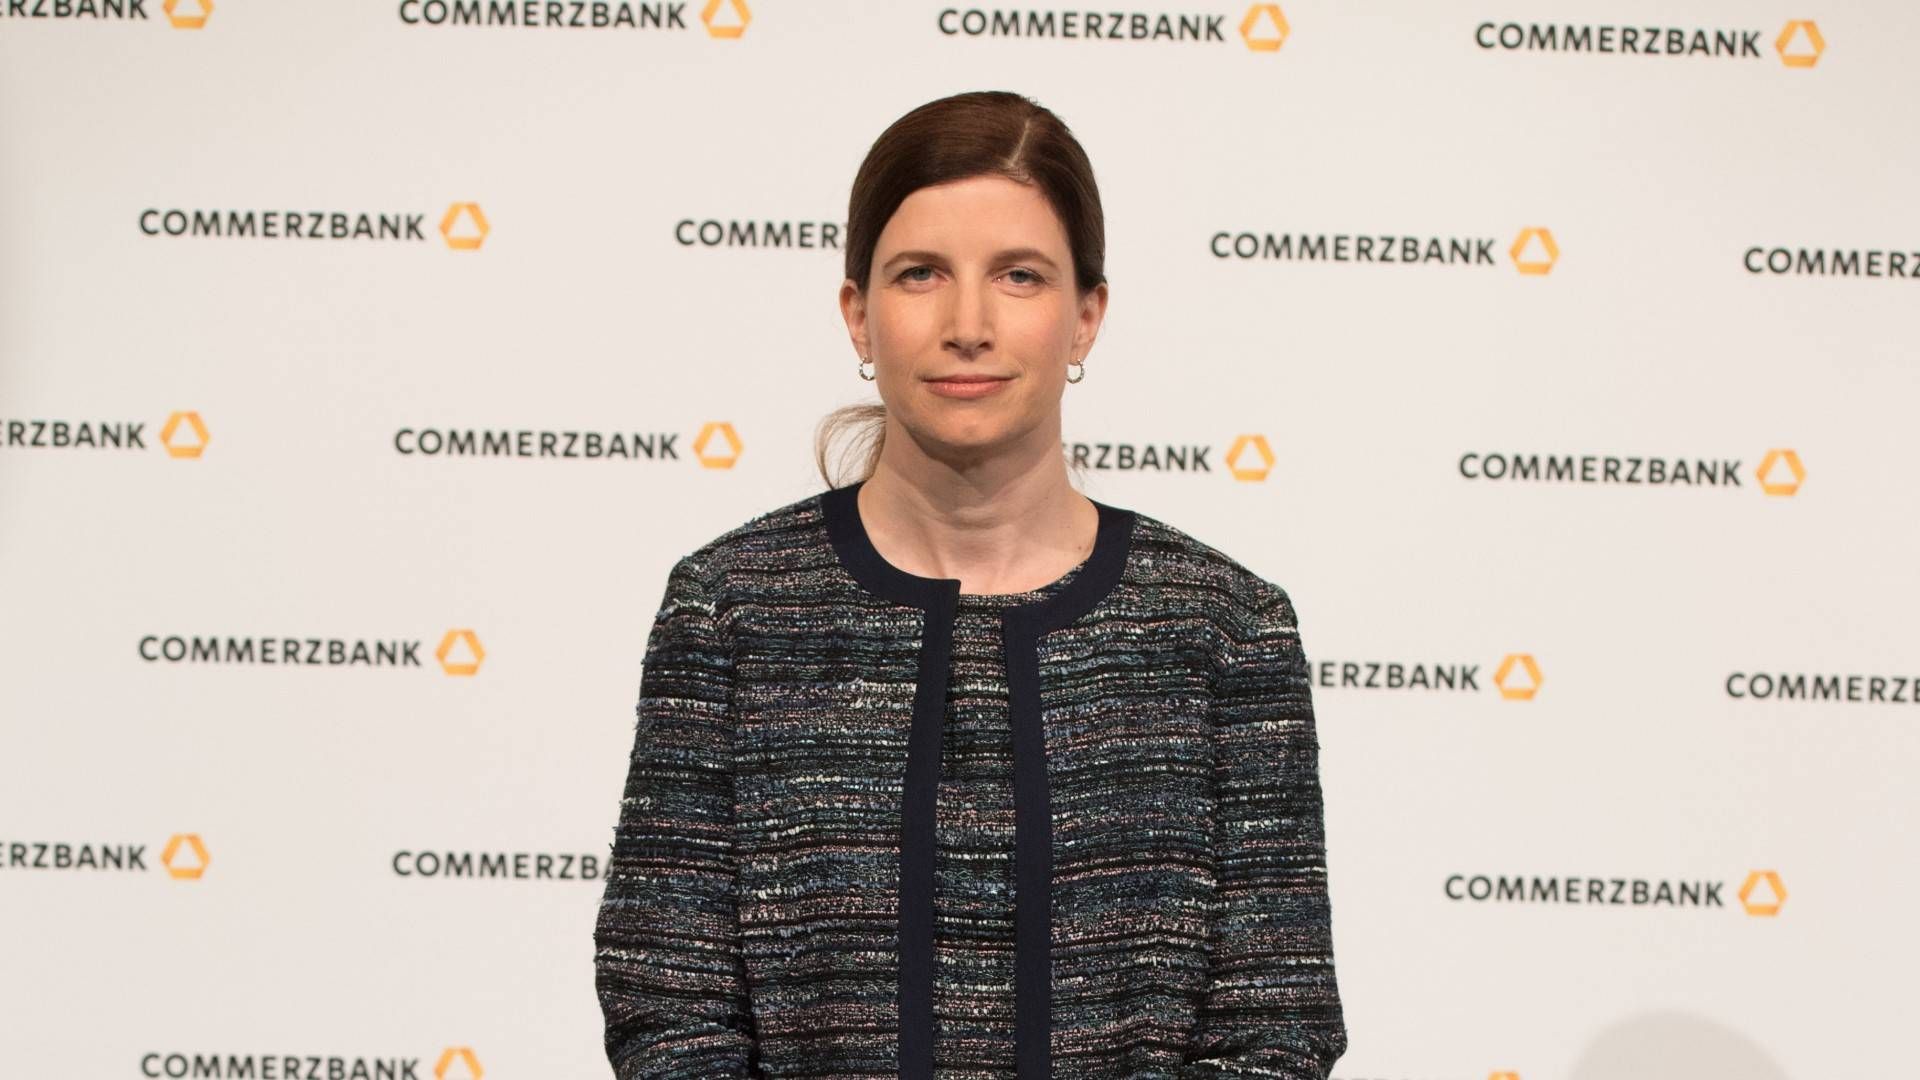 Bettina Orlopp, CFO der Commerzbank | Foto: (c) dpa